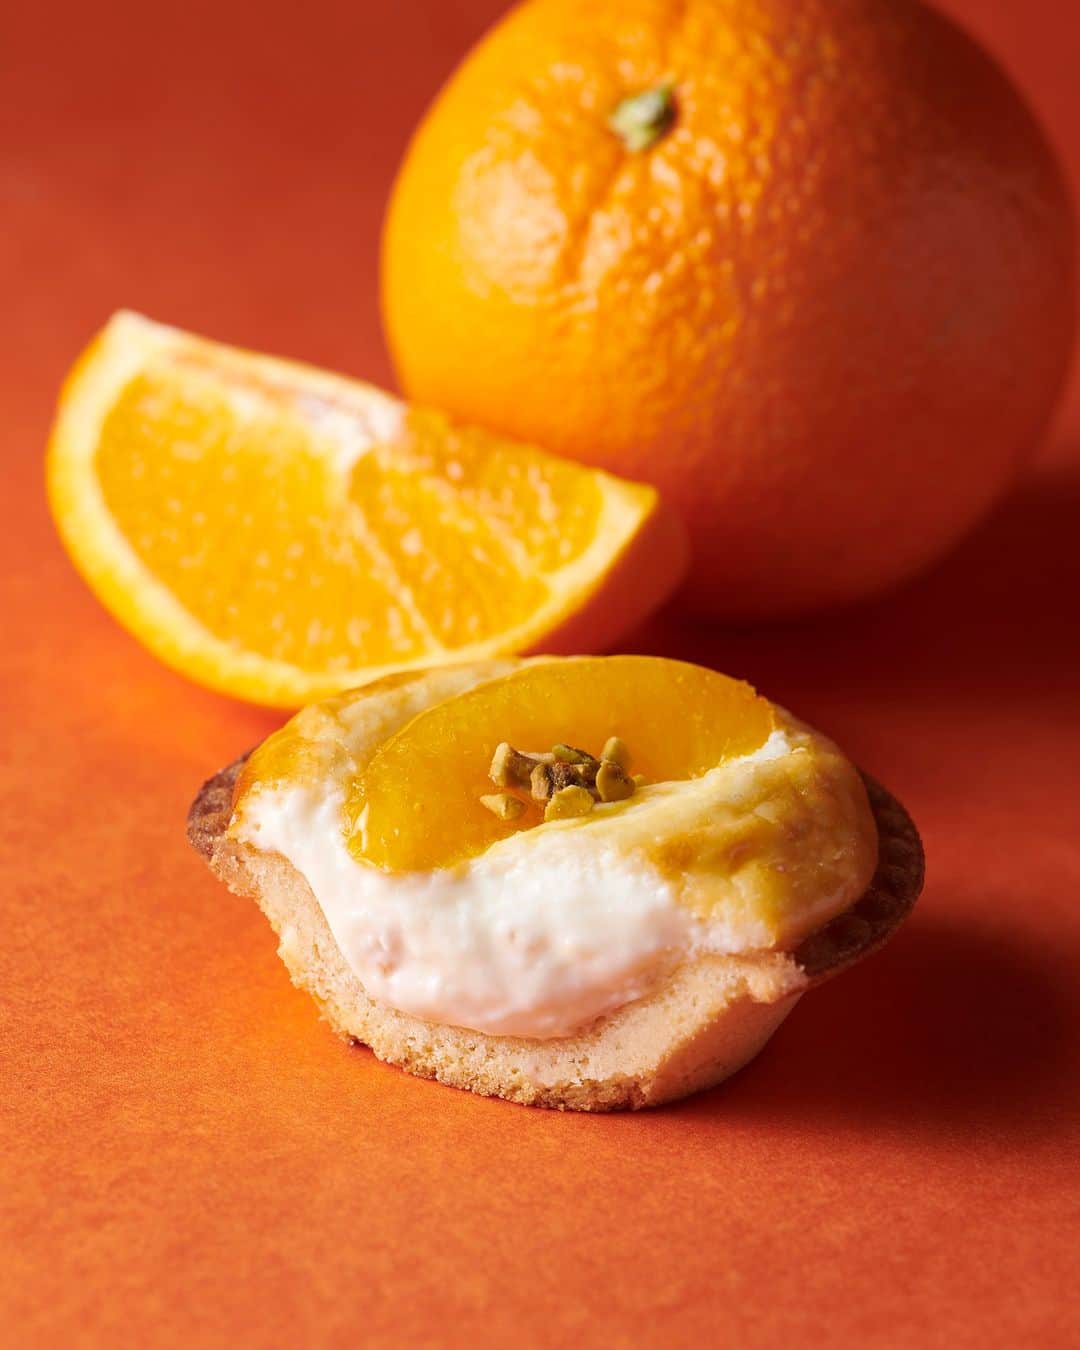 BAKE CHEESE TART OFFICIALのインスタグラム：「【販売中】焼きたてチーズタルト オレンジヨーグルト🍊  これからの季節にぴったり🌿  チーズムースには、 濃厚でなめらかな口当たりのギリシャヨーグルト 程よい酸味のサワークリーム そしてさっぱりとした香りのオレンジピールを練り込み、 爽やかさとクリーミーさを存分に味わうことができる一品に。  ムースの上にオレンジ果肉と ピスタチオをトッピングしました。  #ベイクチーズタルト #bakecheesetart #チーズタルト専門店 #チーズタルト #チーズ #チーズケーキ #オレンジヨーグルトチーズタルト #オレンジタルト #ヨーグルト #ギリシャヨーグルト」